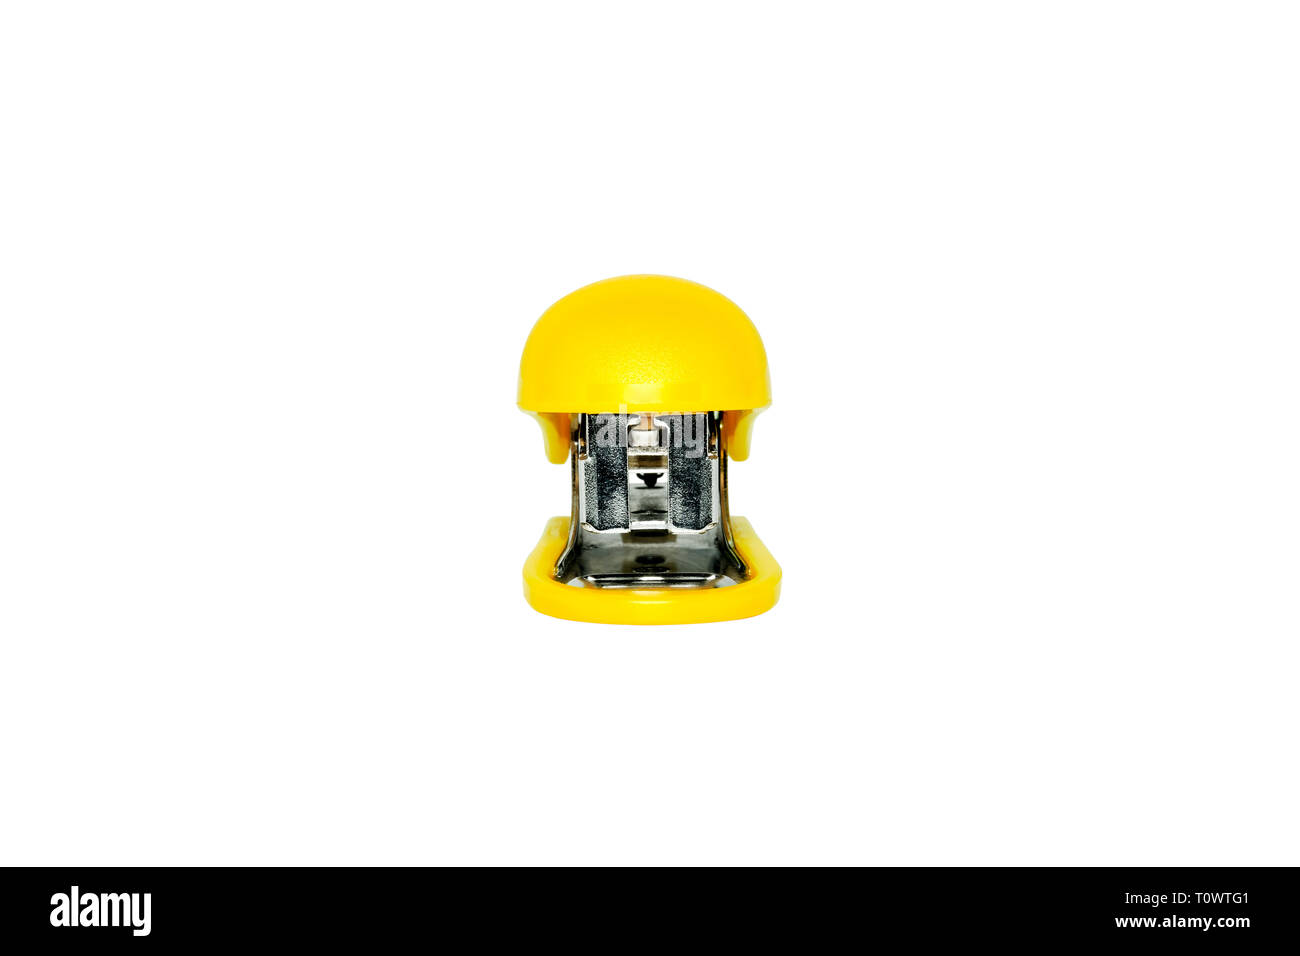 Yellow colored stapler closeup on white background 2019 Stock Photo